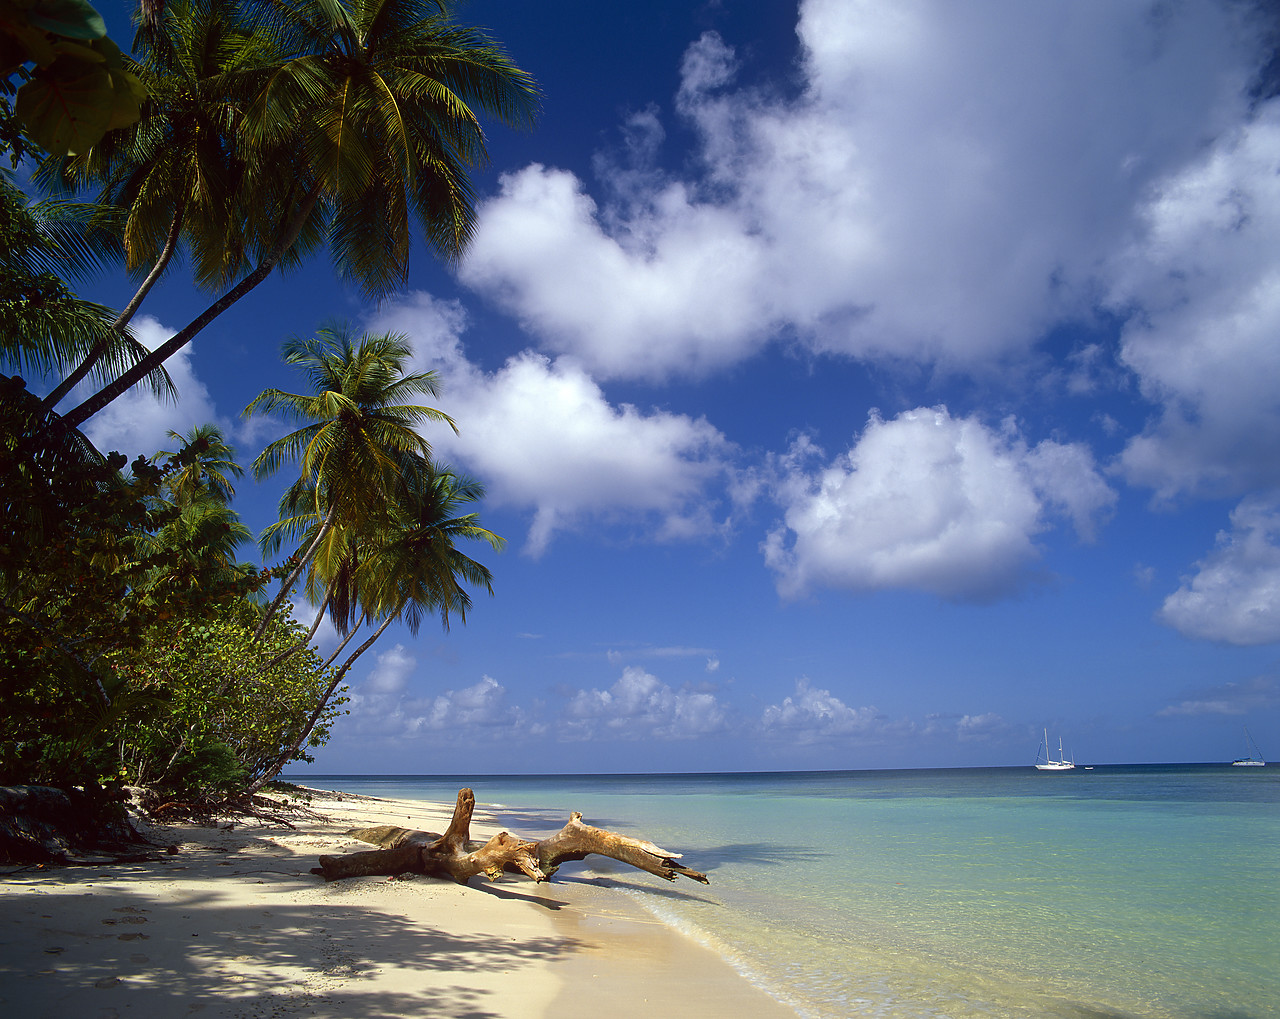 #200383-3 - Palm Trees & Beach, Pigeon Point, Tobago, West Indies, Caribbean